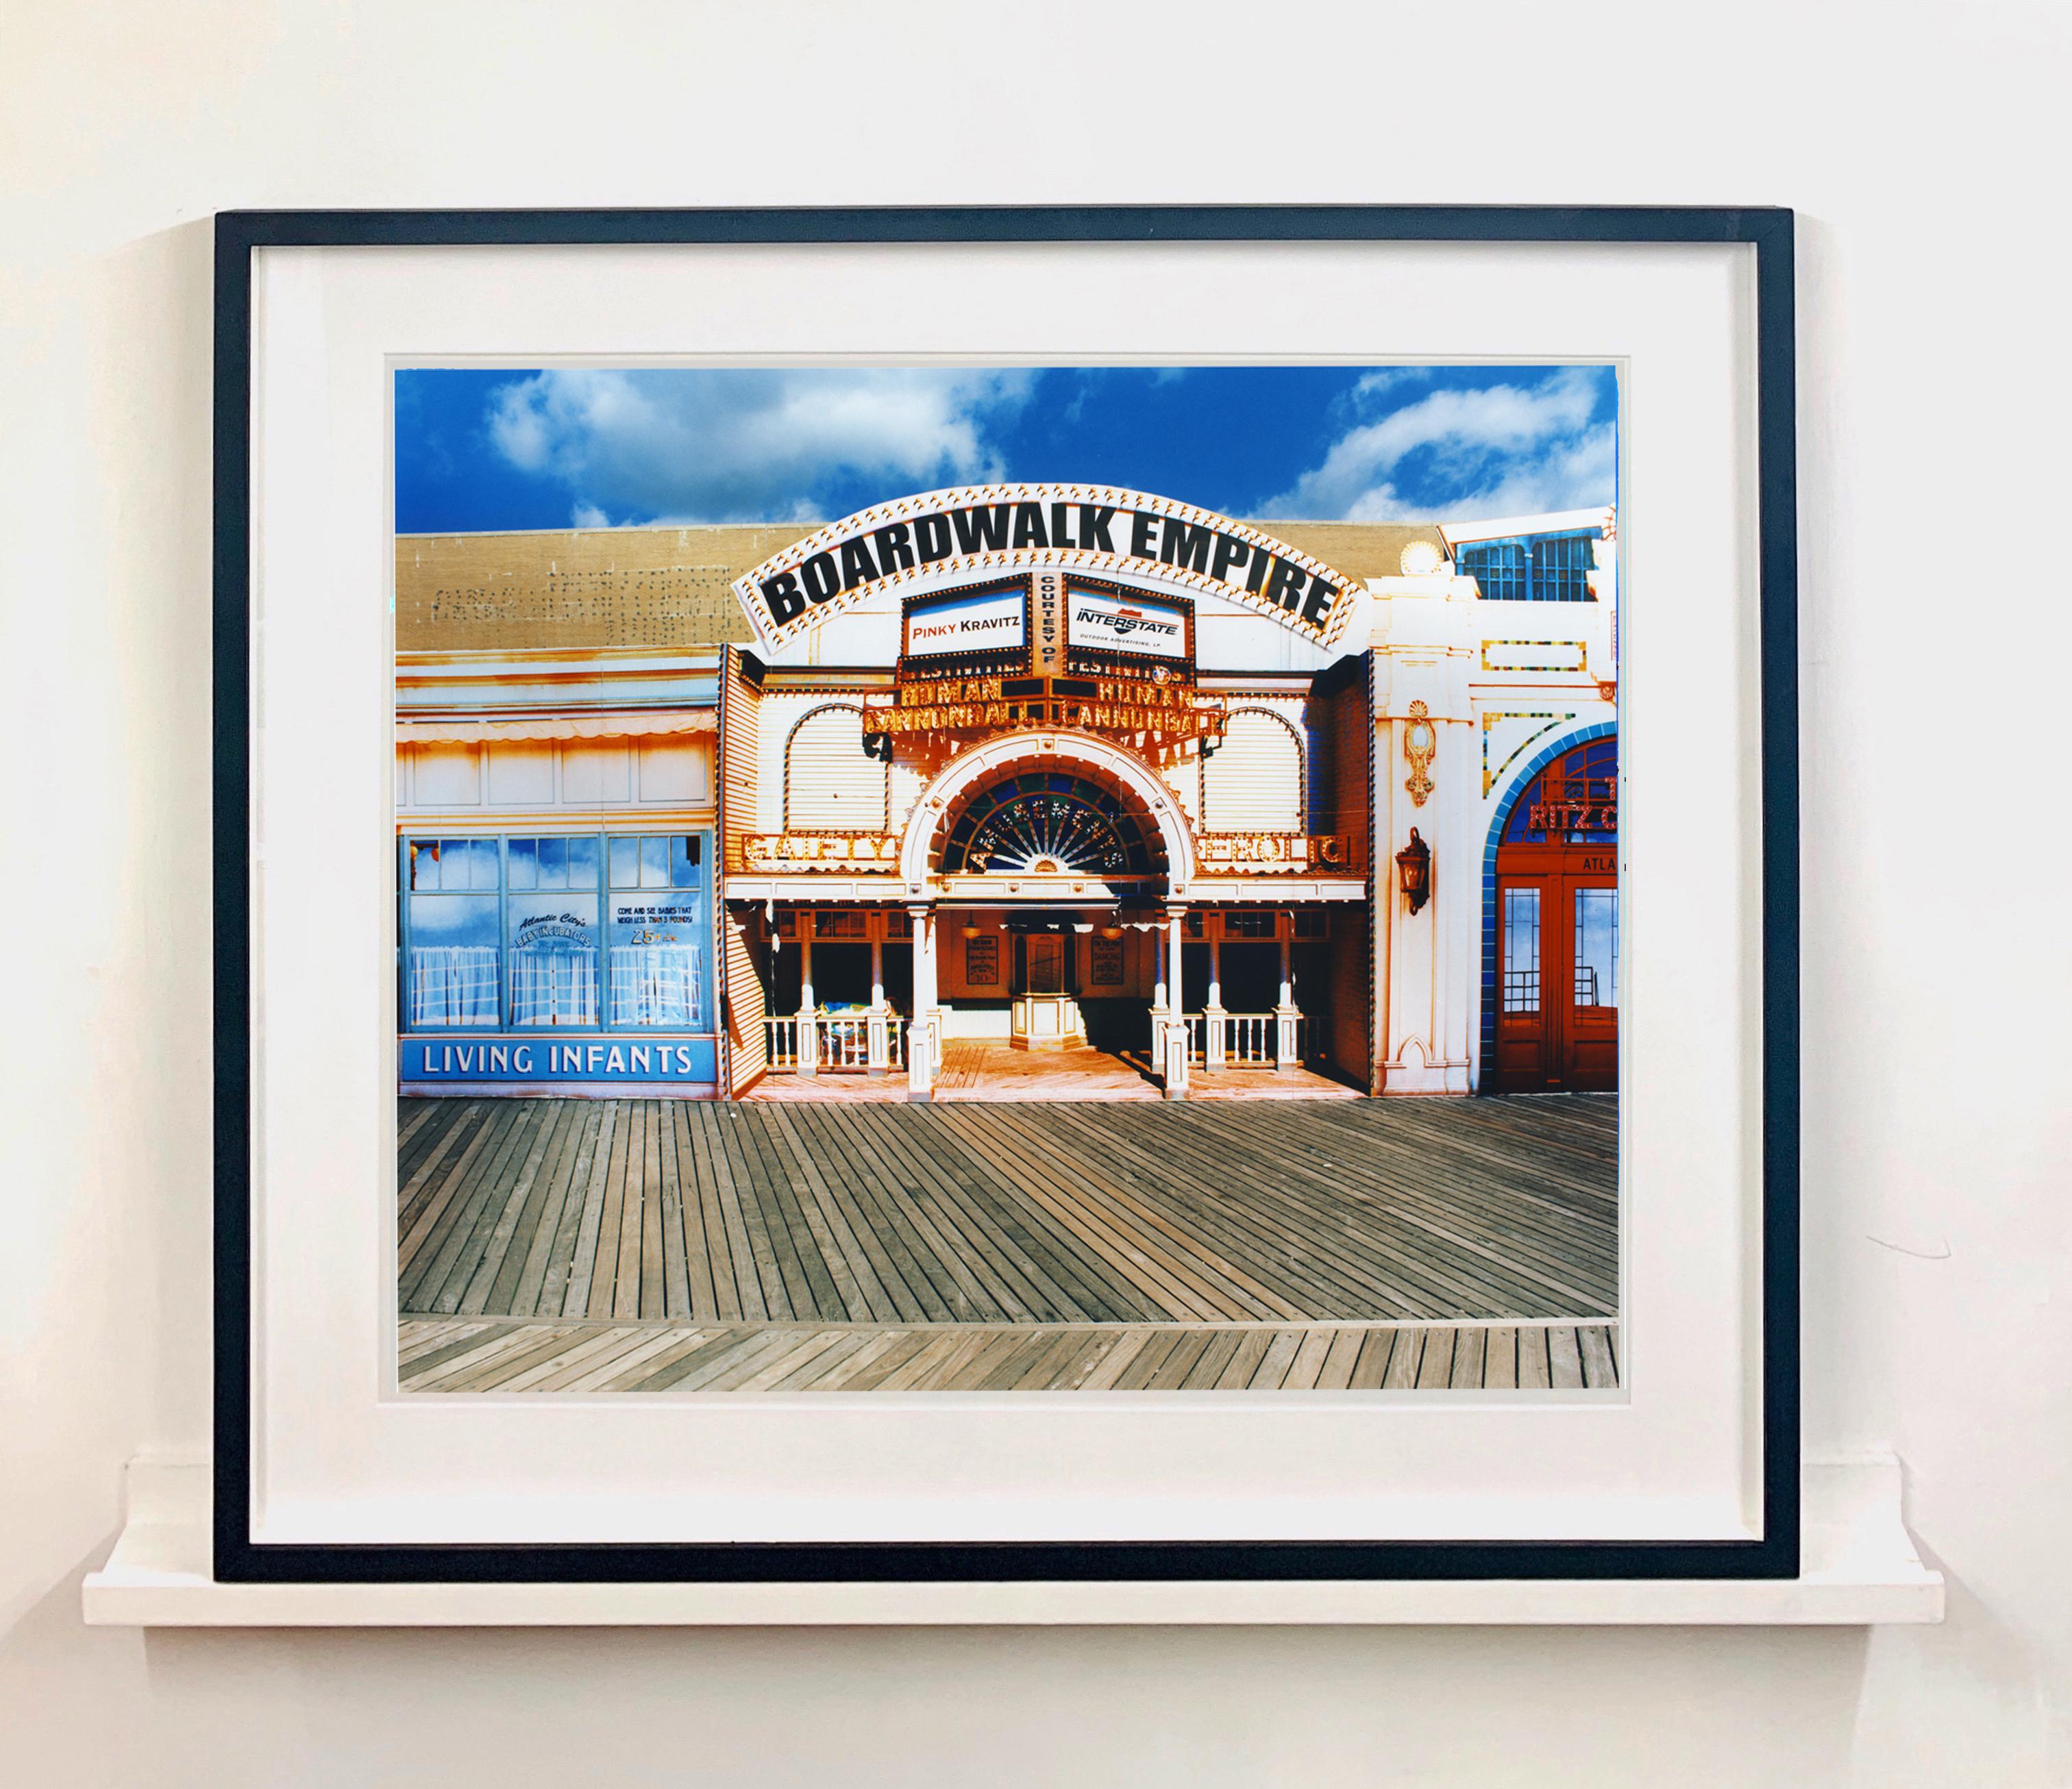 Boardwalk Empire in the Sun, Atlantic City, New Jersey – amerikanisches Farbfoto (Grau), Color Photograph, von Richard Heeps